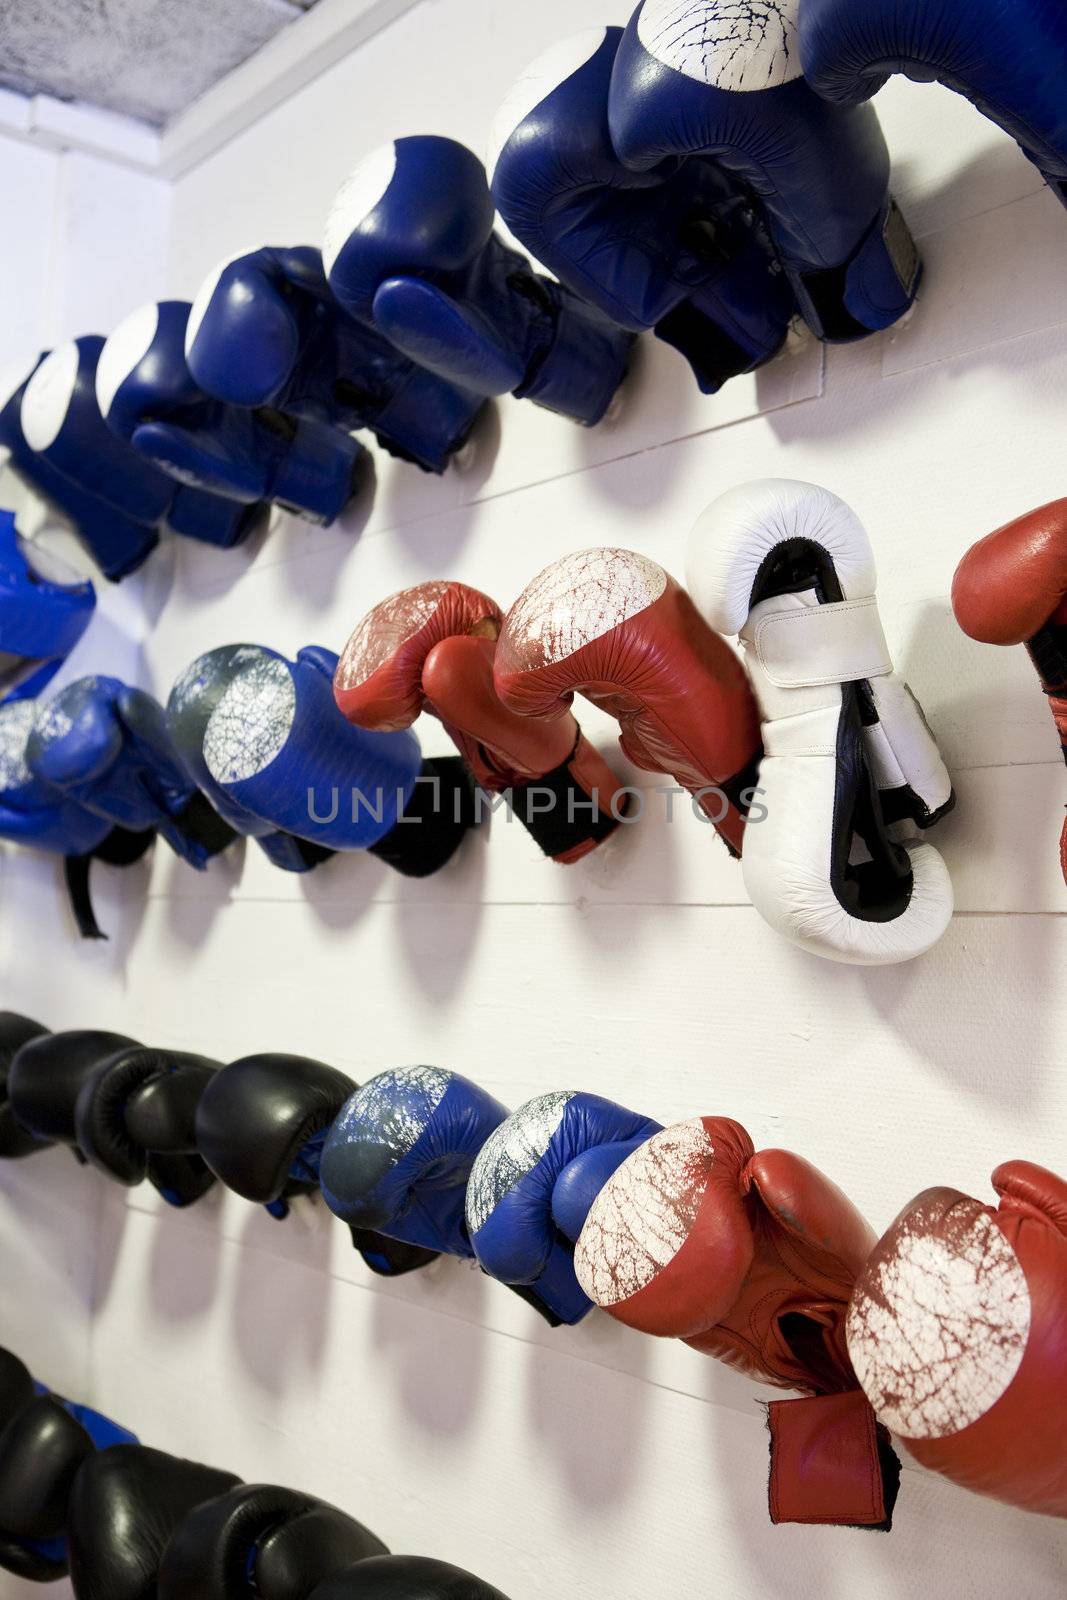 Boxing Gloves by gemenacom